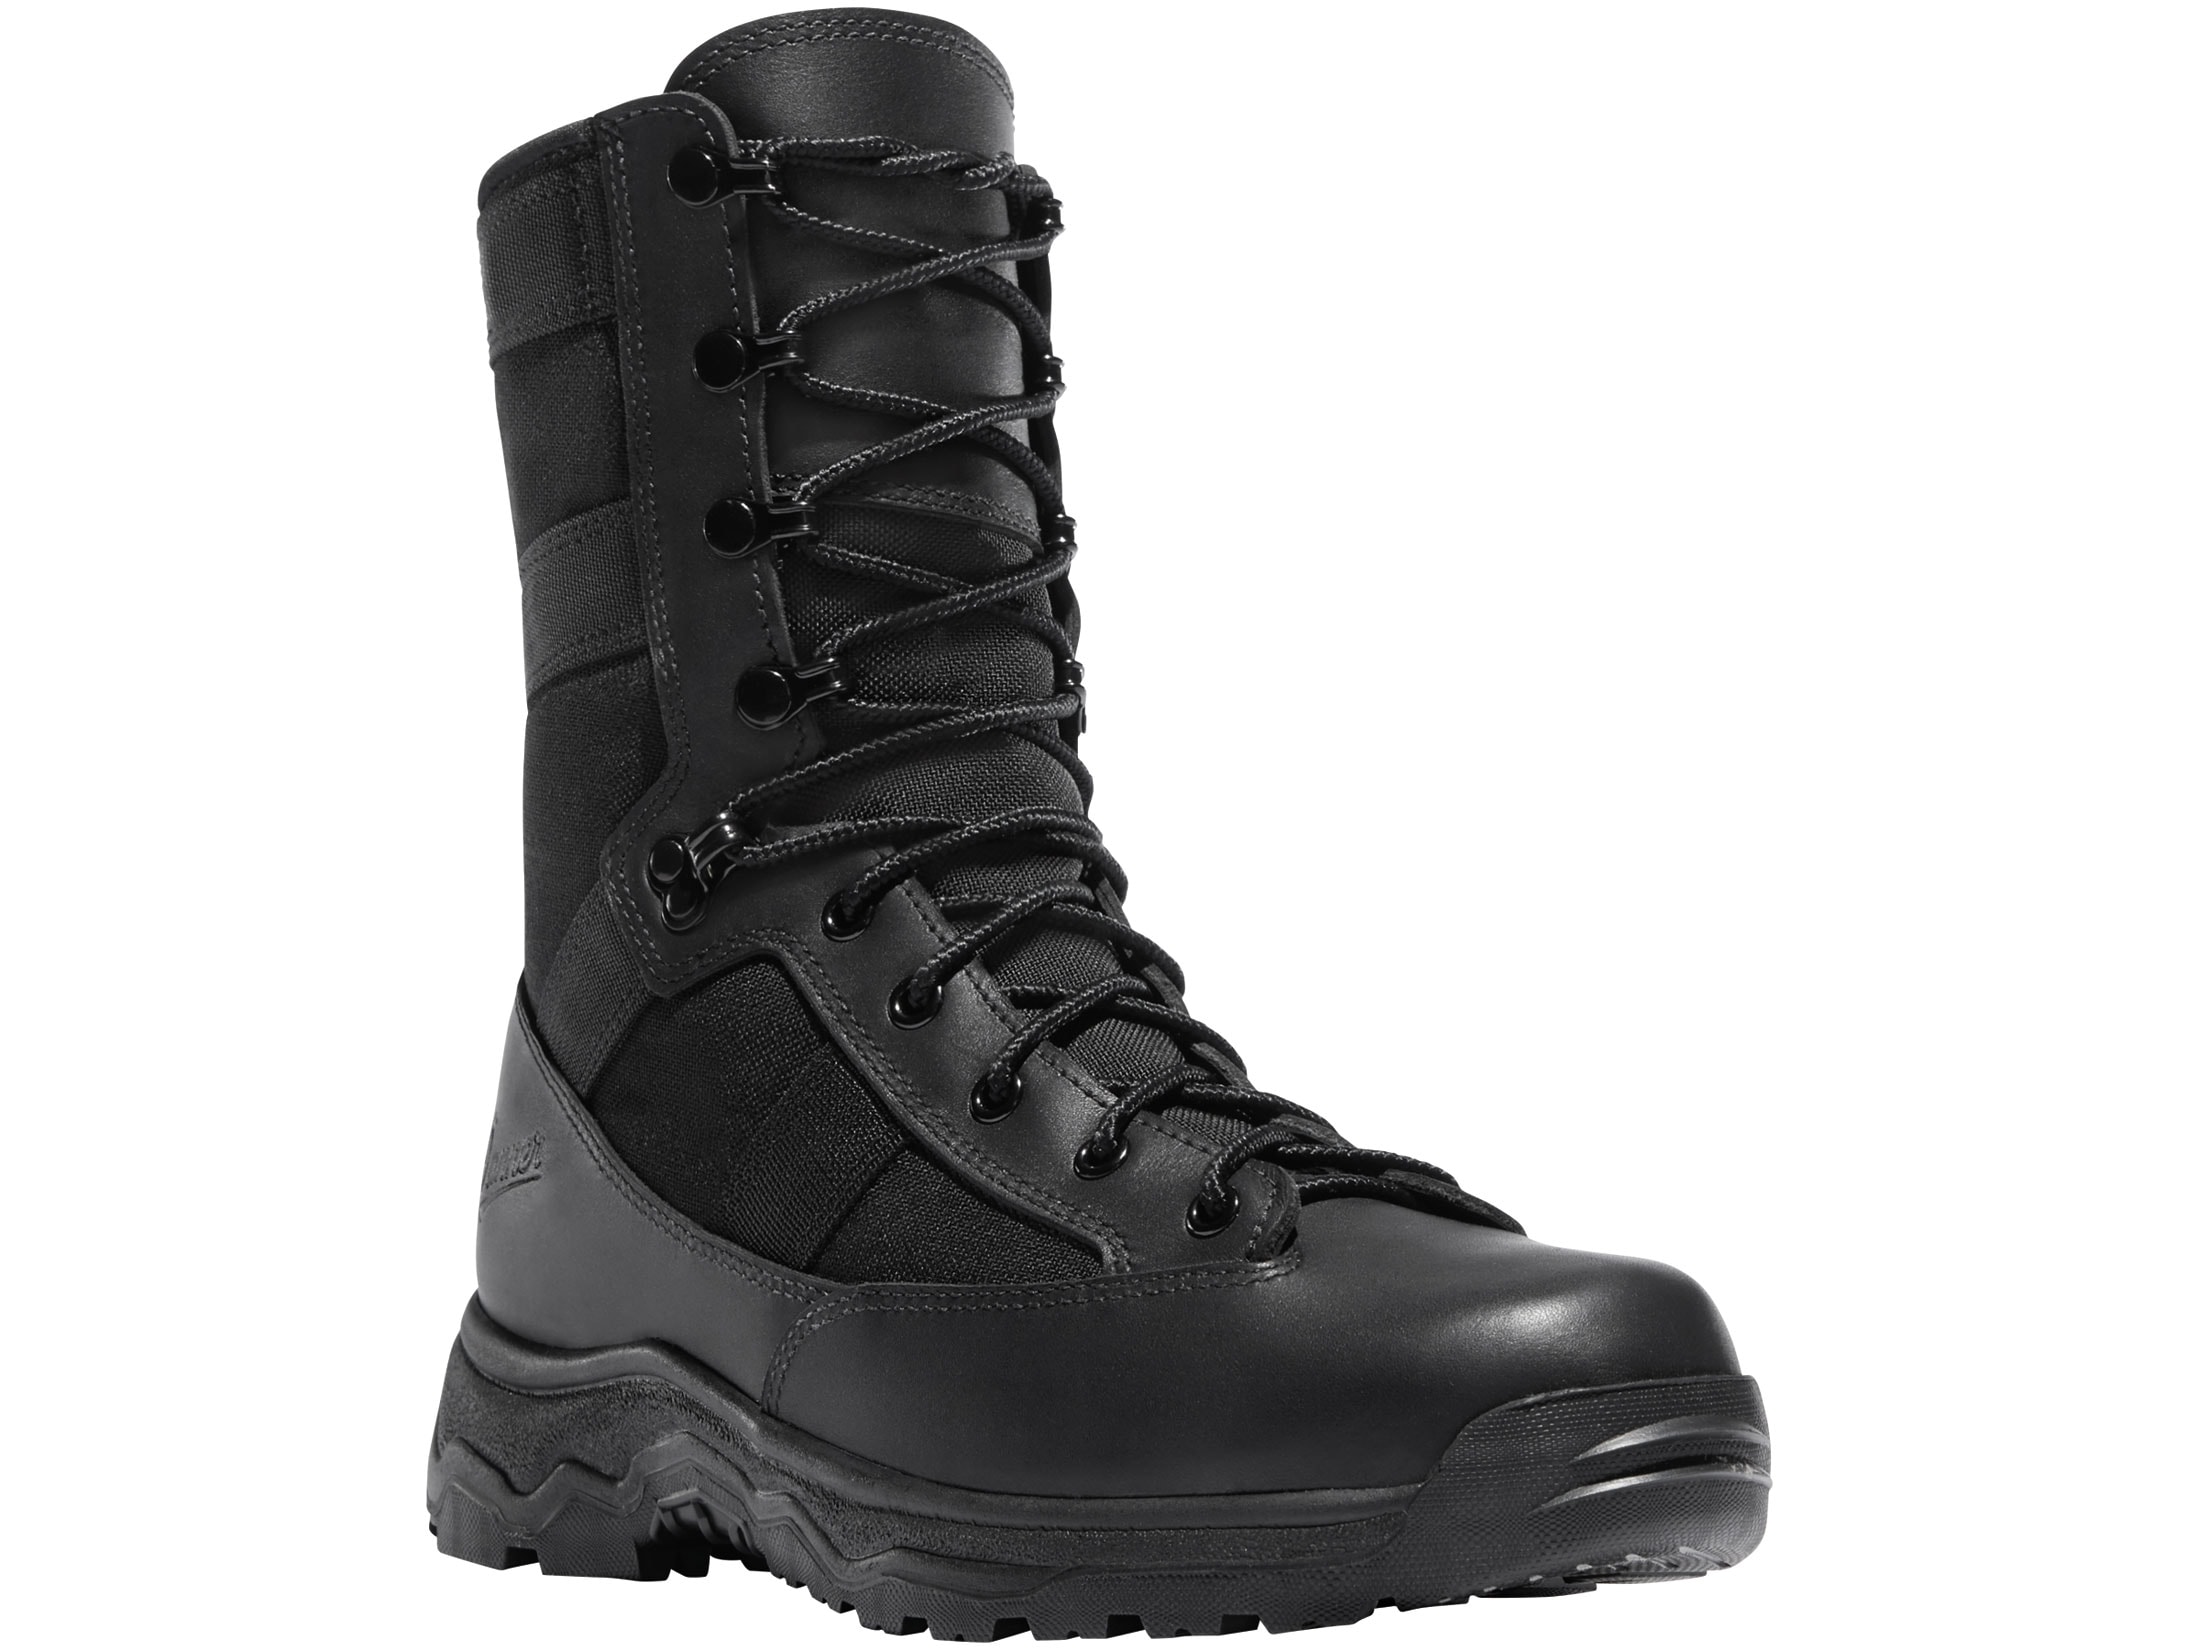 Danner Reckoning 8 Tactical Boots Leather/Nylon Black Men's 10 D